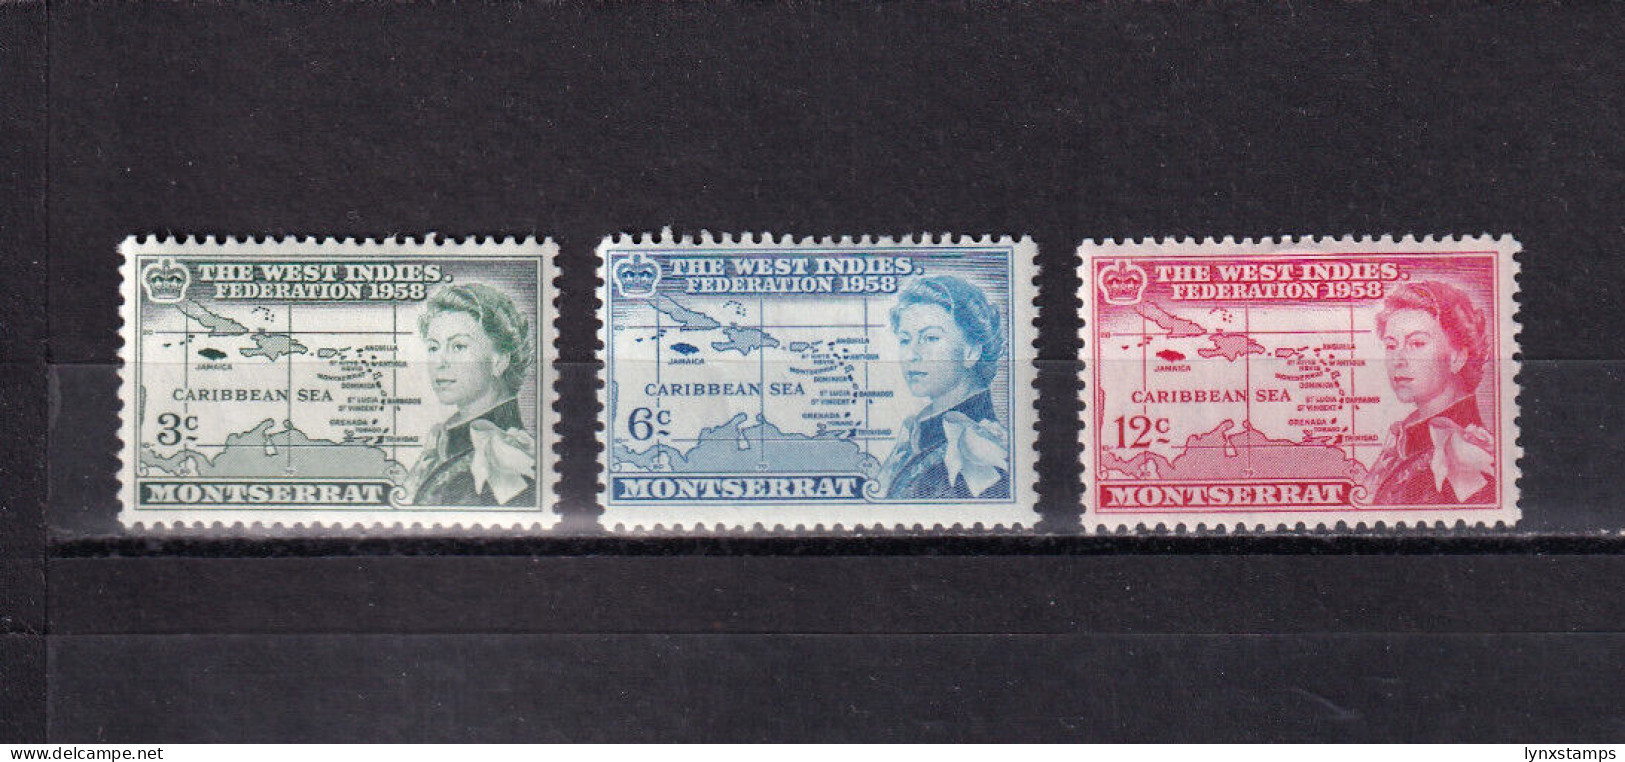 LI07 Montserrat 1958 West Indies Federation Mint Hinged Stamps - Montserrat